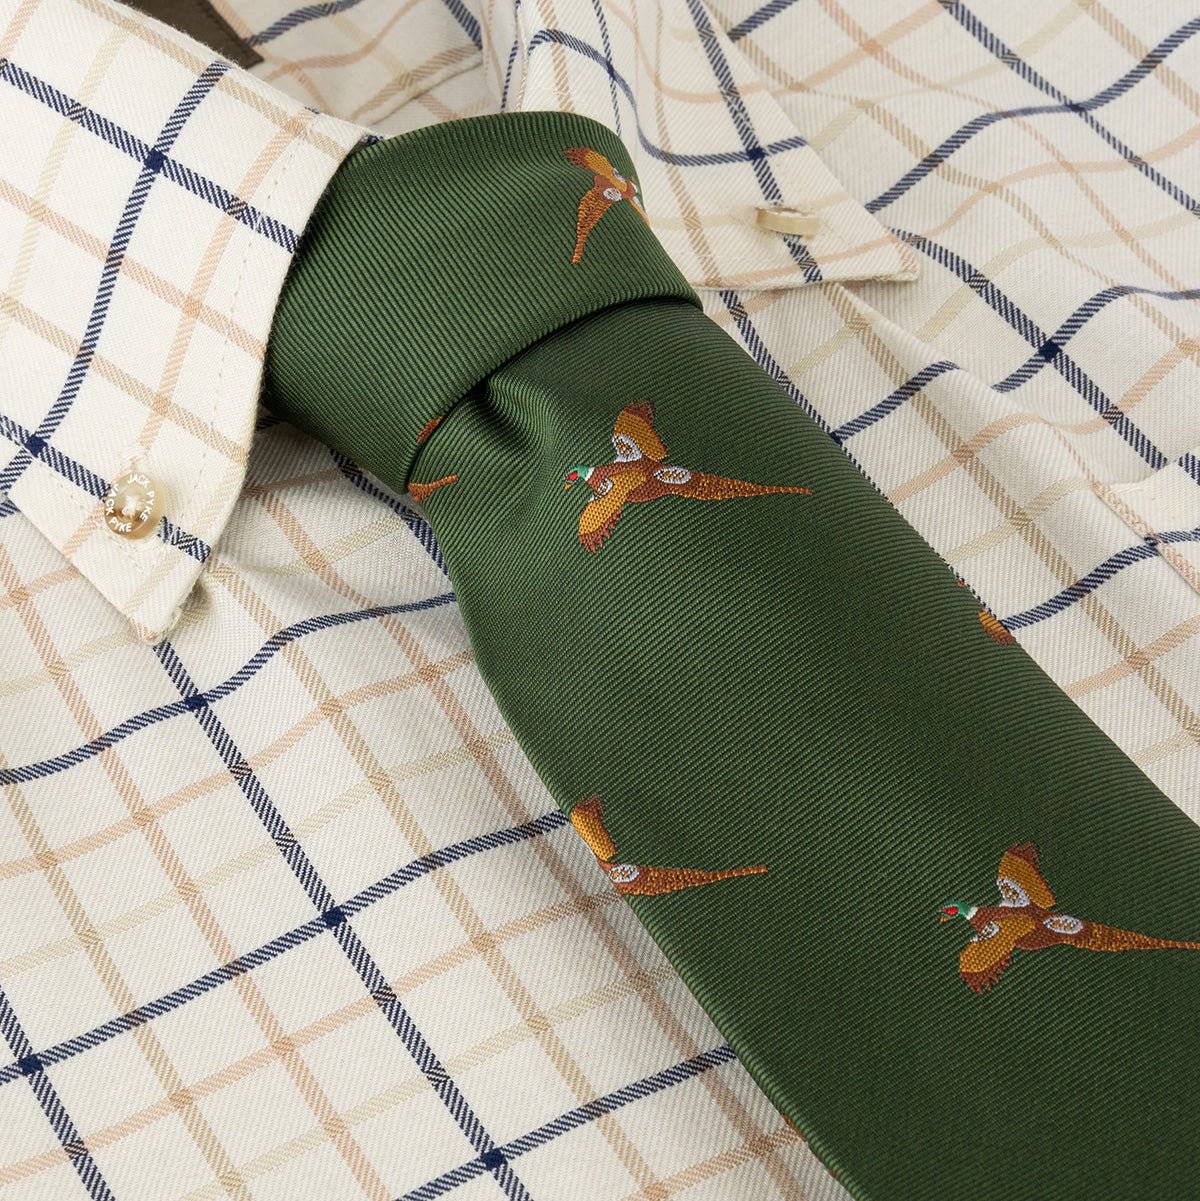 Jack Pyke Hunting Tie Pheasant - John Bull Clothing